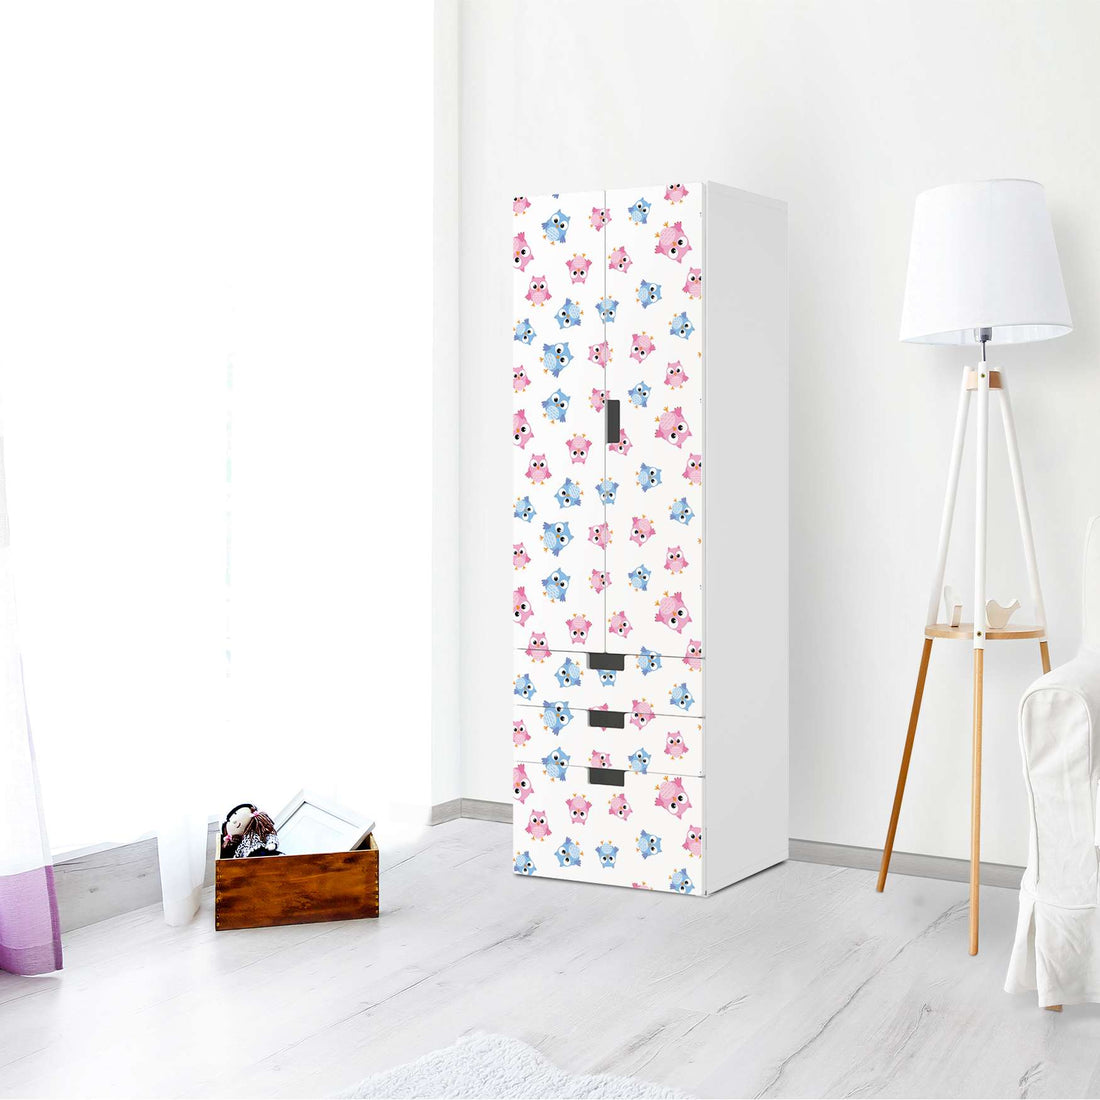 Klebefolie Eulenparty - IKEA Stuva kombiniert - 3 Schubladen und 2 große Türen (Kombination 1) - Kinderzimmer